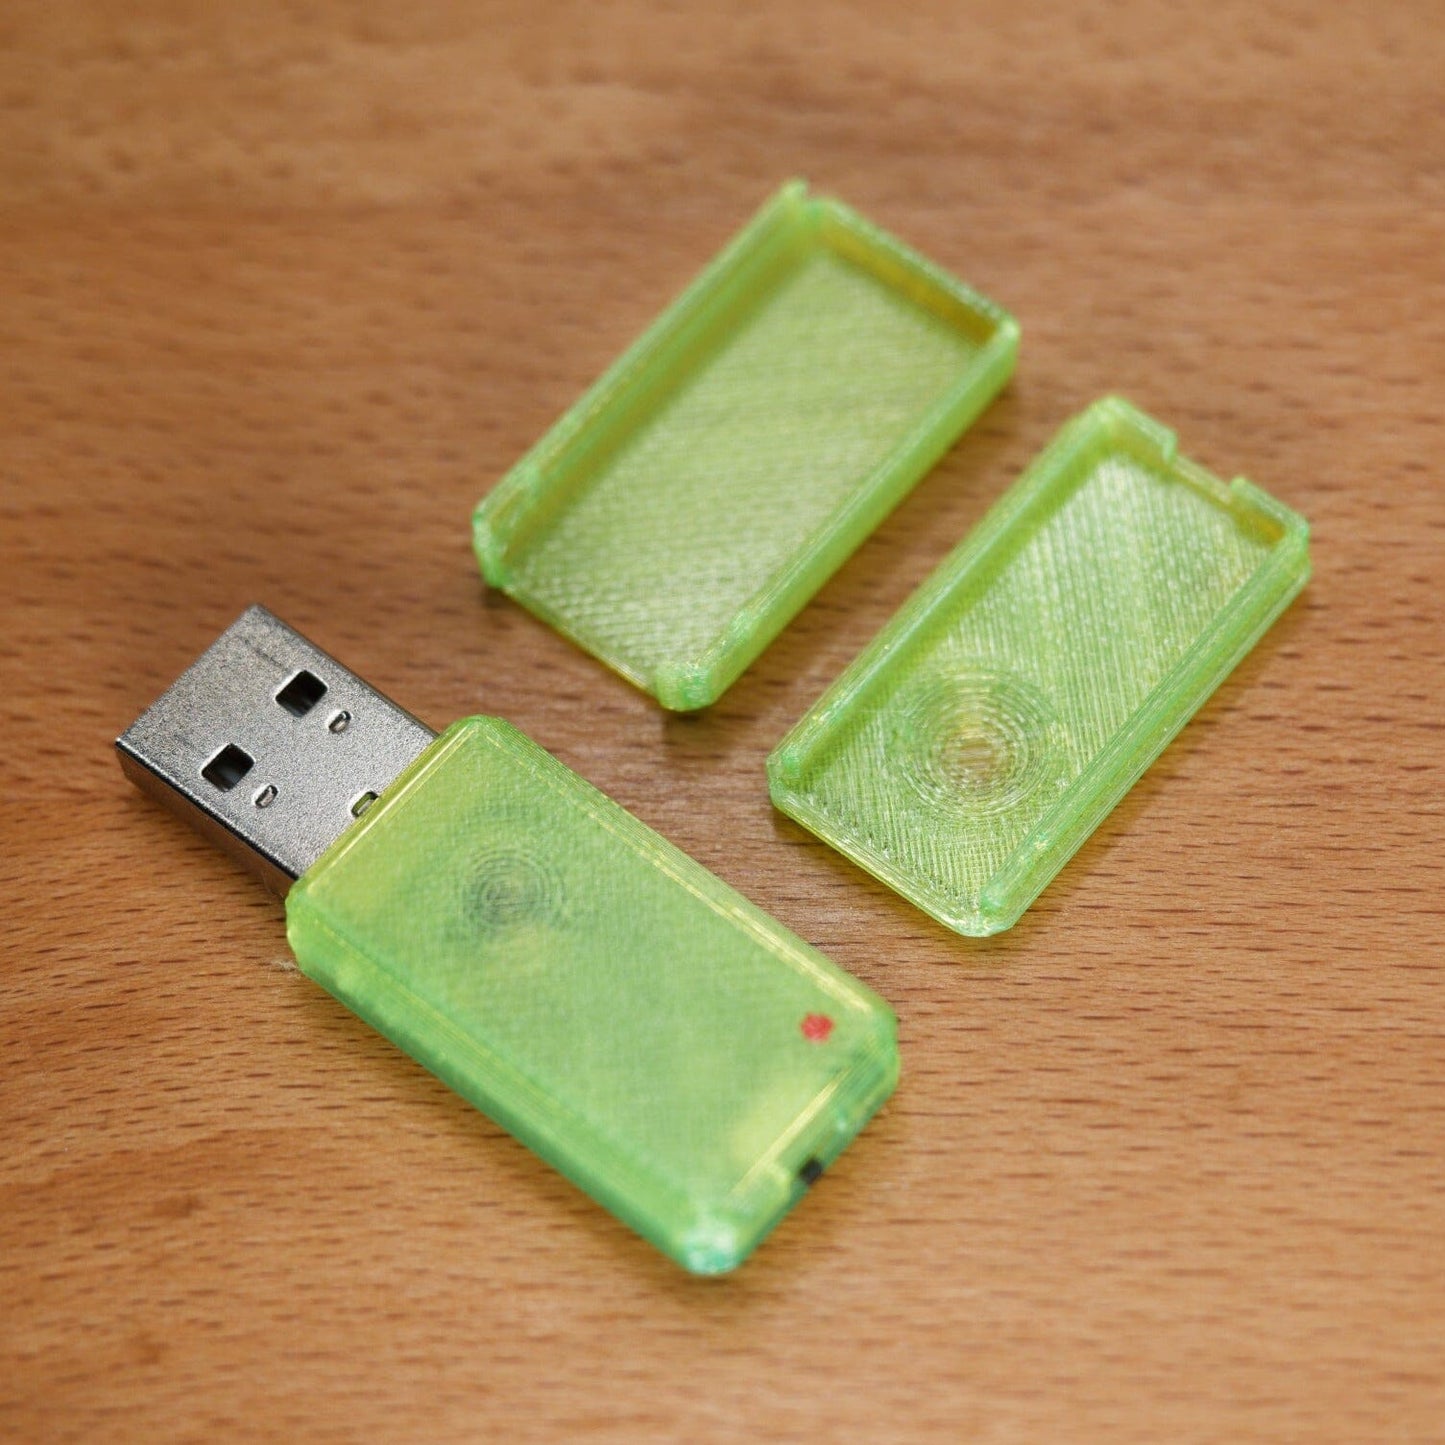 USB Nova with green Case